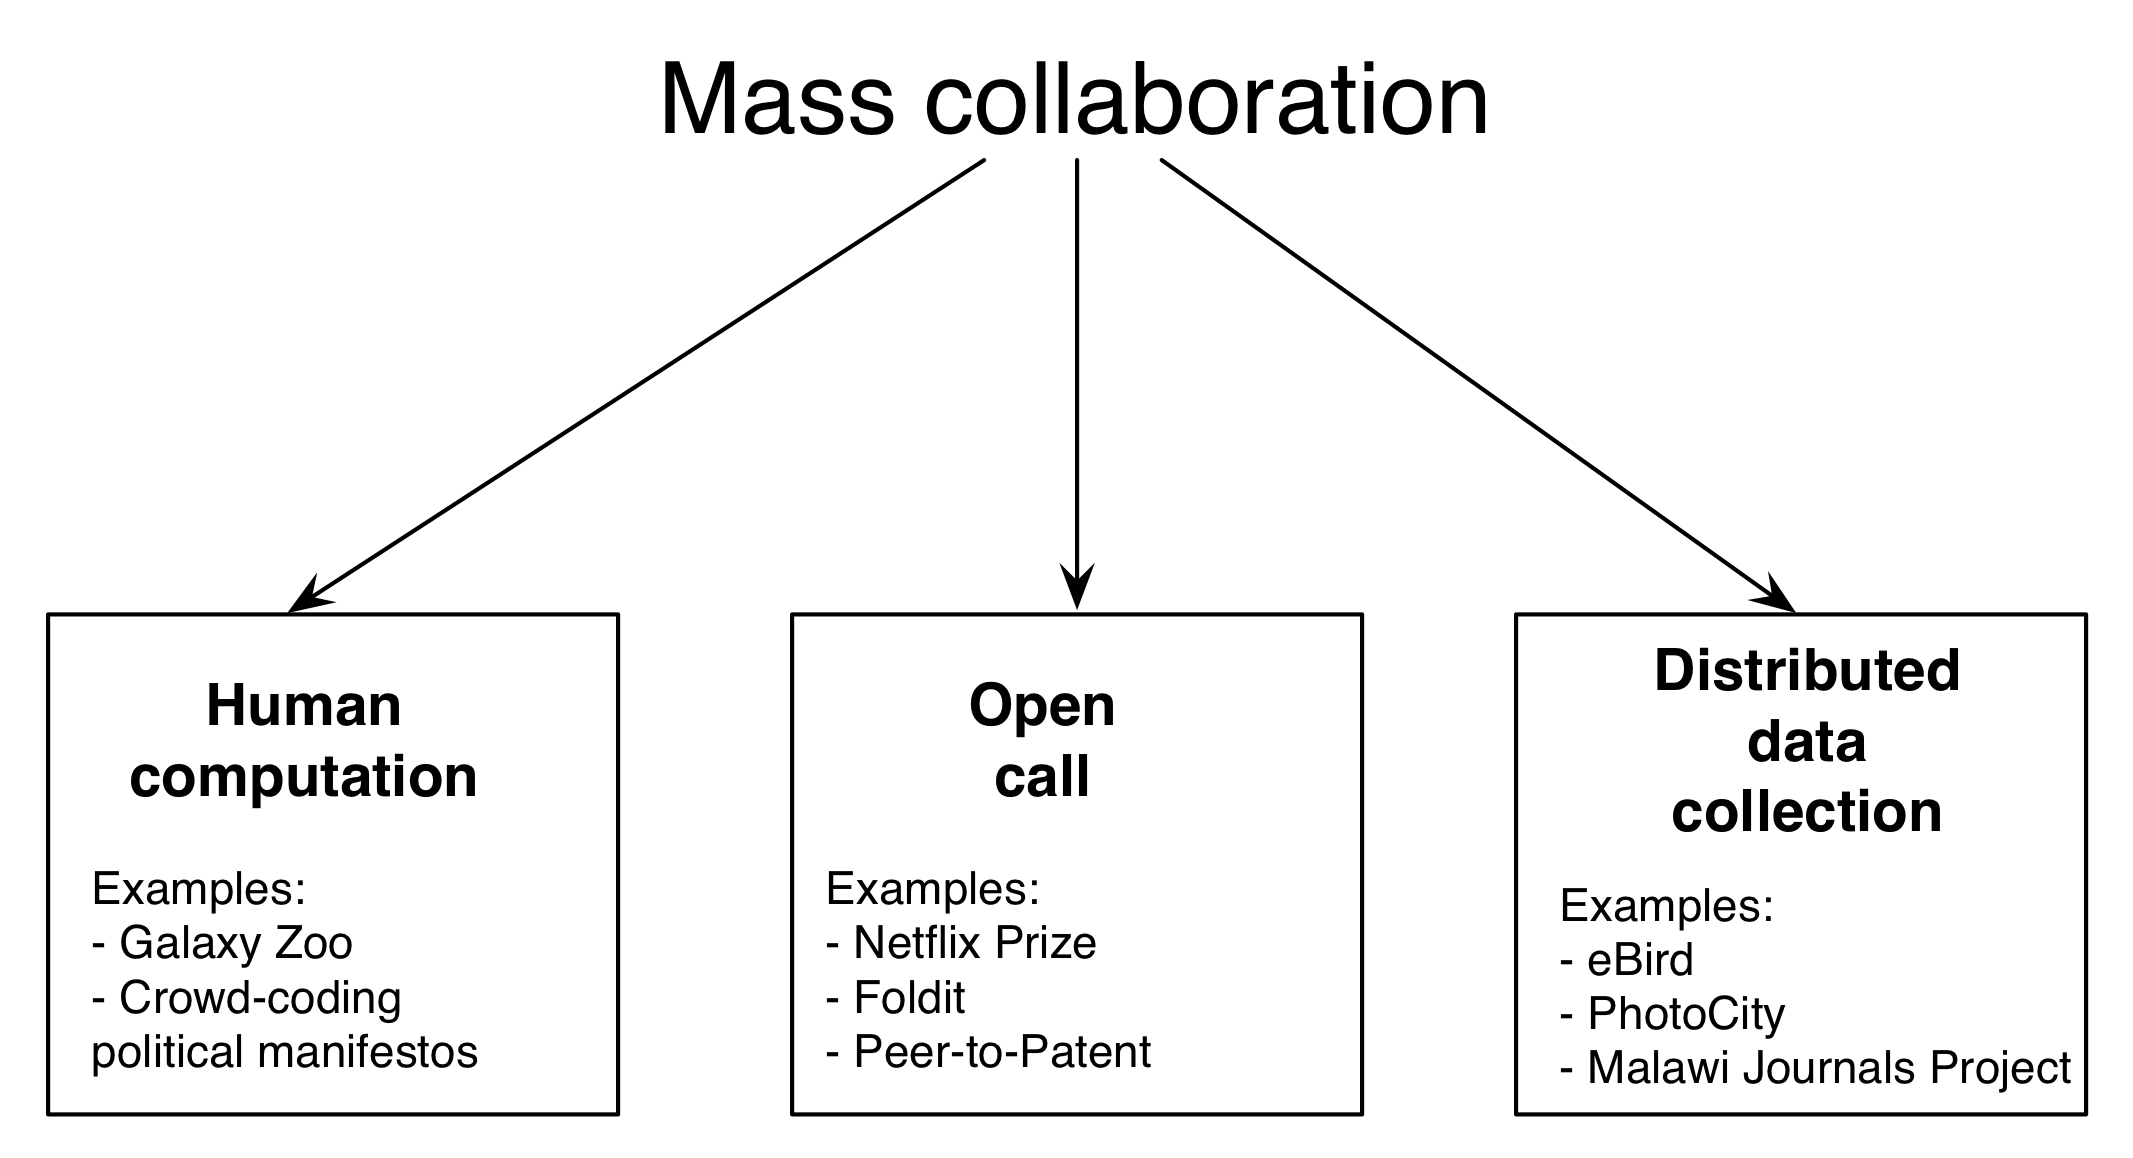 Figura 5.1: Esquema de colaboración masiva. Este capítulo organízase en torno a tres formas principais de colaboración masiva: computación humana, convocatoria aberta e recopilación de datos distribuídos. En xeral, a colaboración masiva combina ideas de campos como ciencia cidadá, crowdsourcing e intelixencia colectiva.